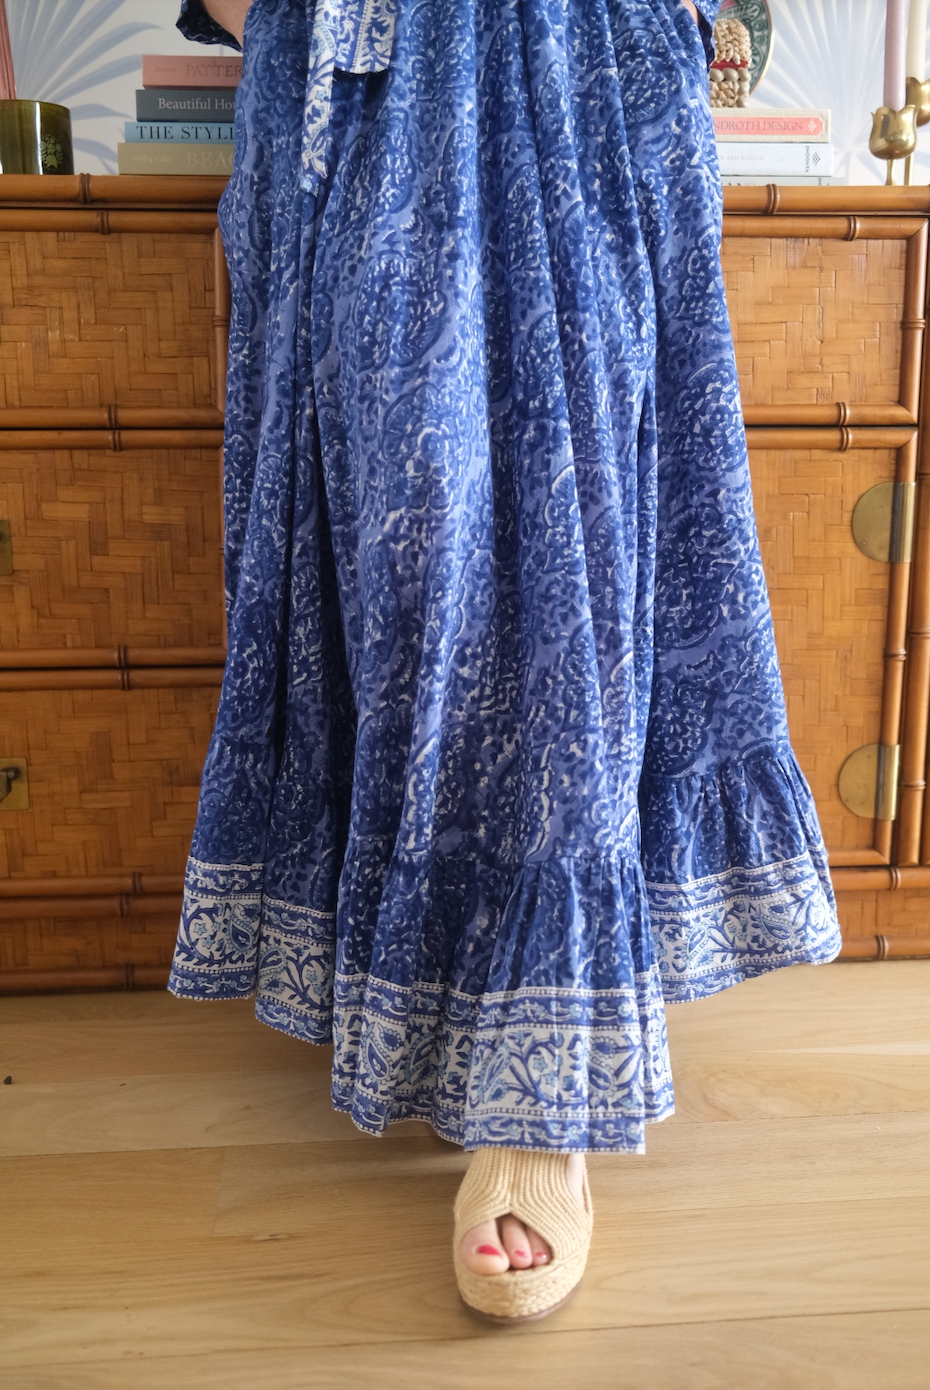 House Dress - Delft Blue